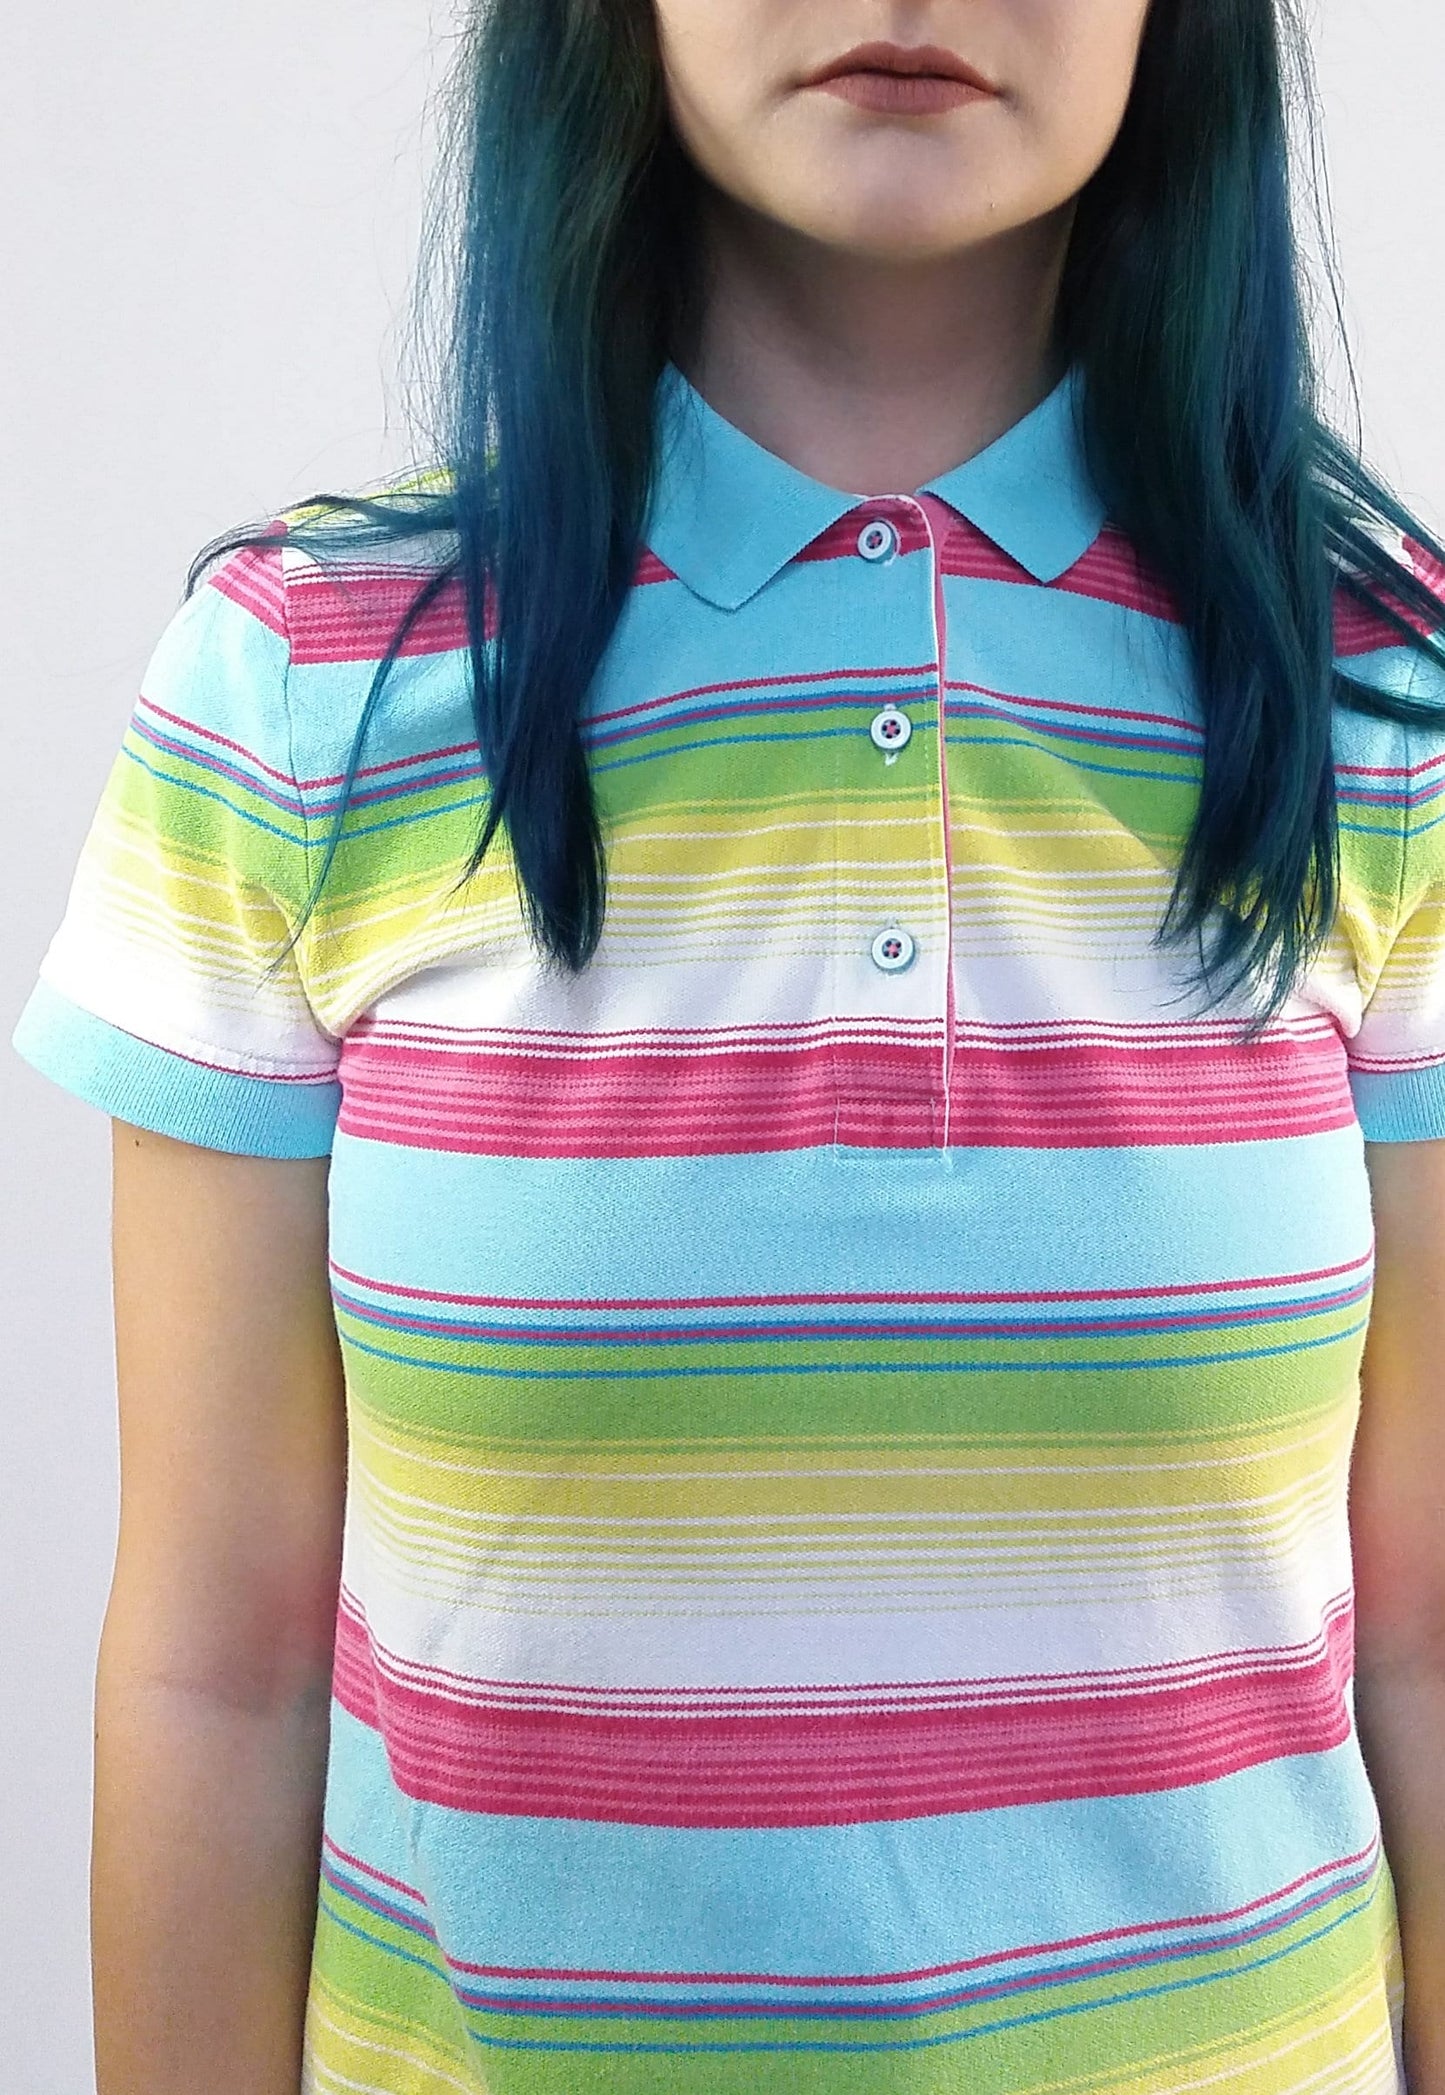 TOMMY HILFIGER Rainbow Stripes Polo T-shirt - size S